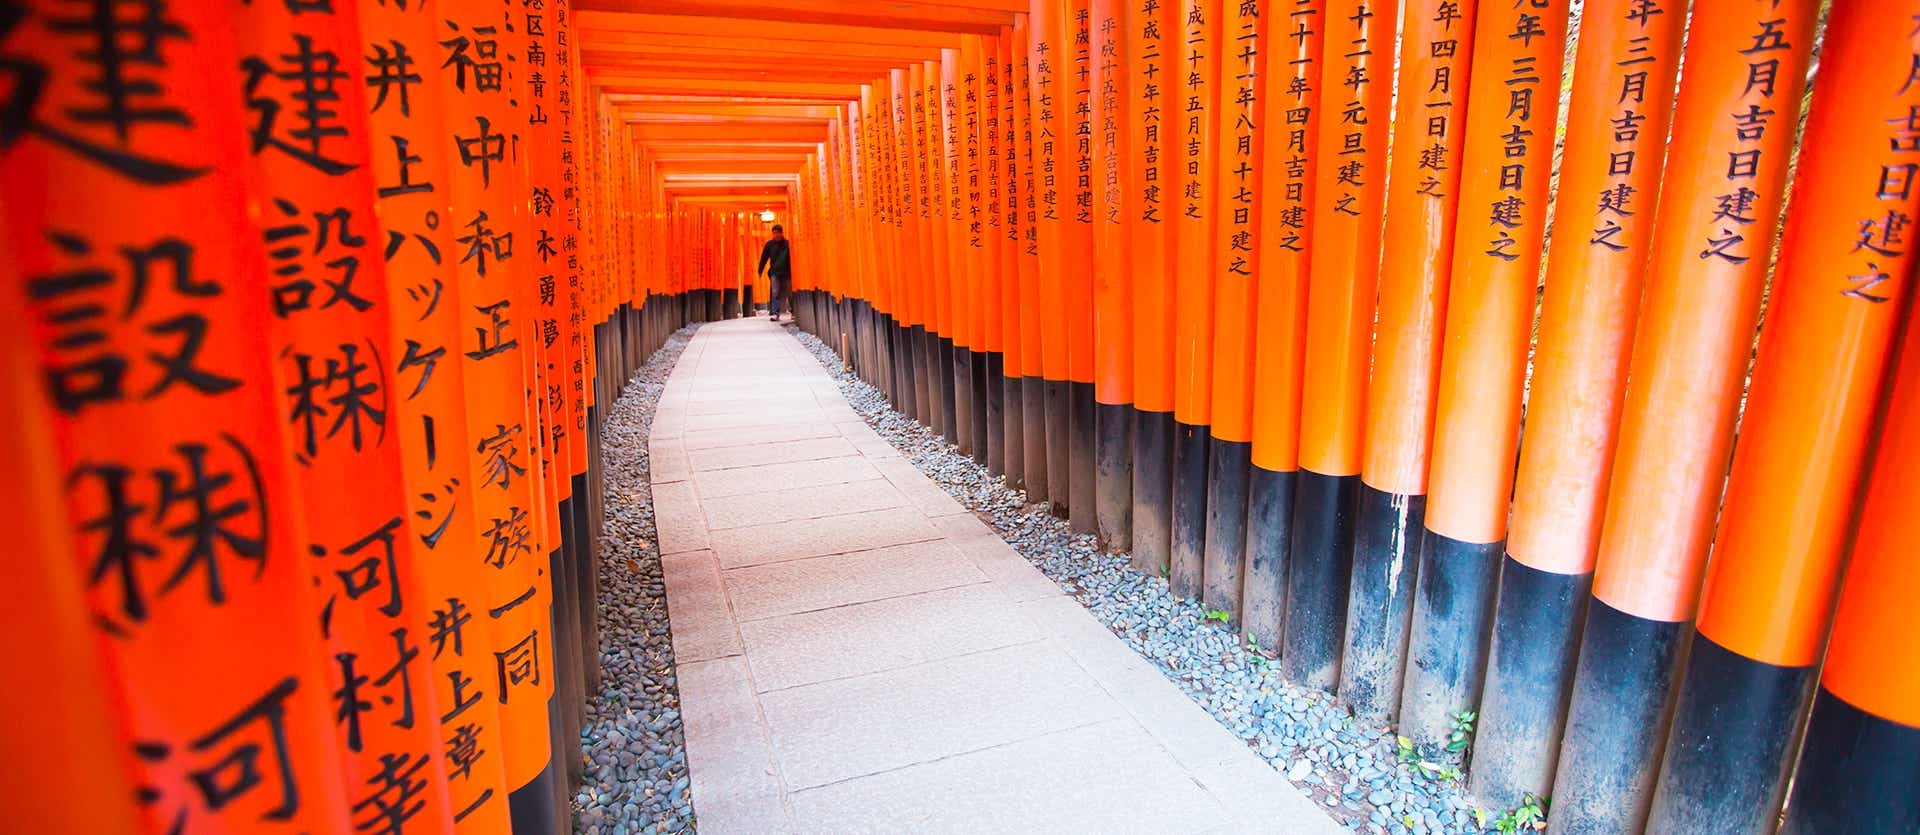 Fushimi Inari <span class="iconos separador"></span> Kioto